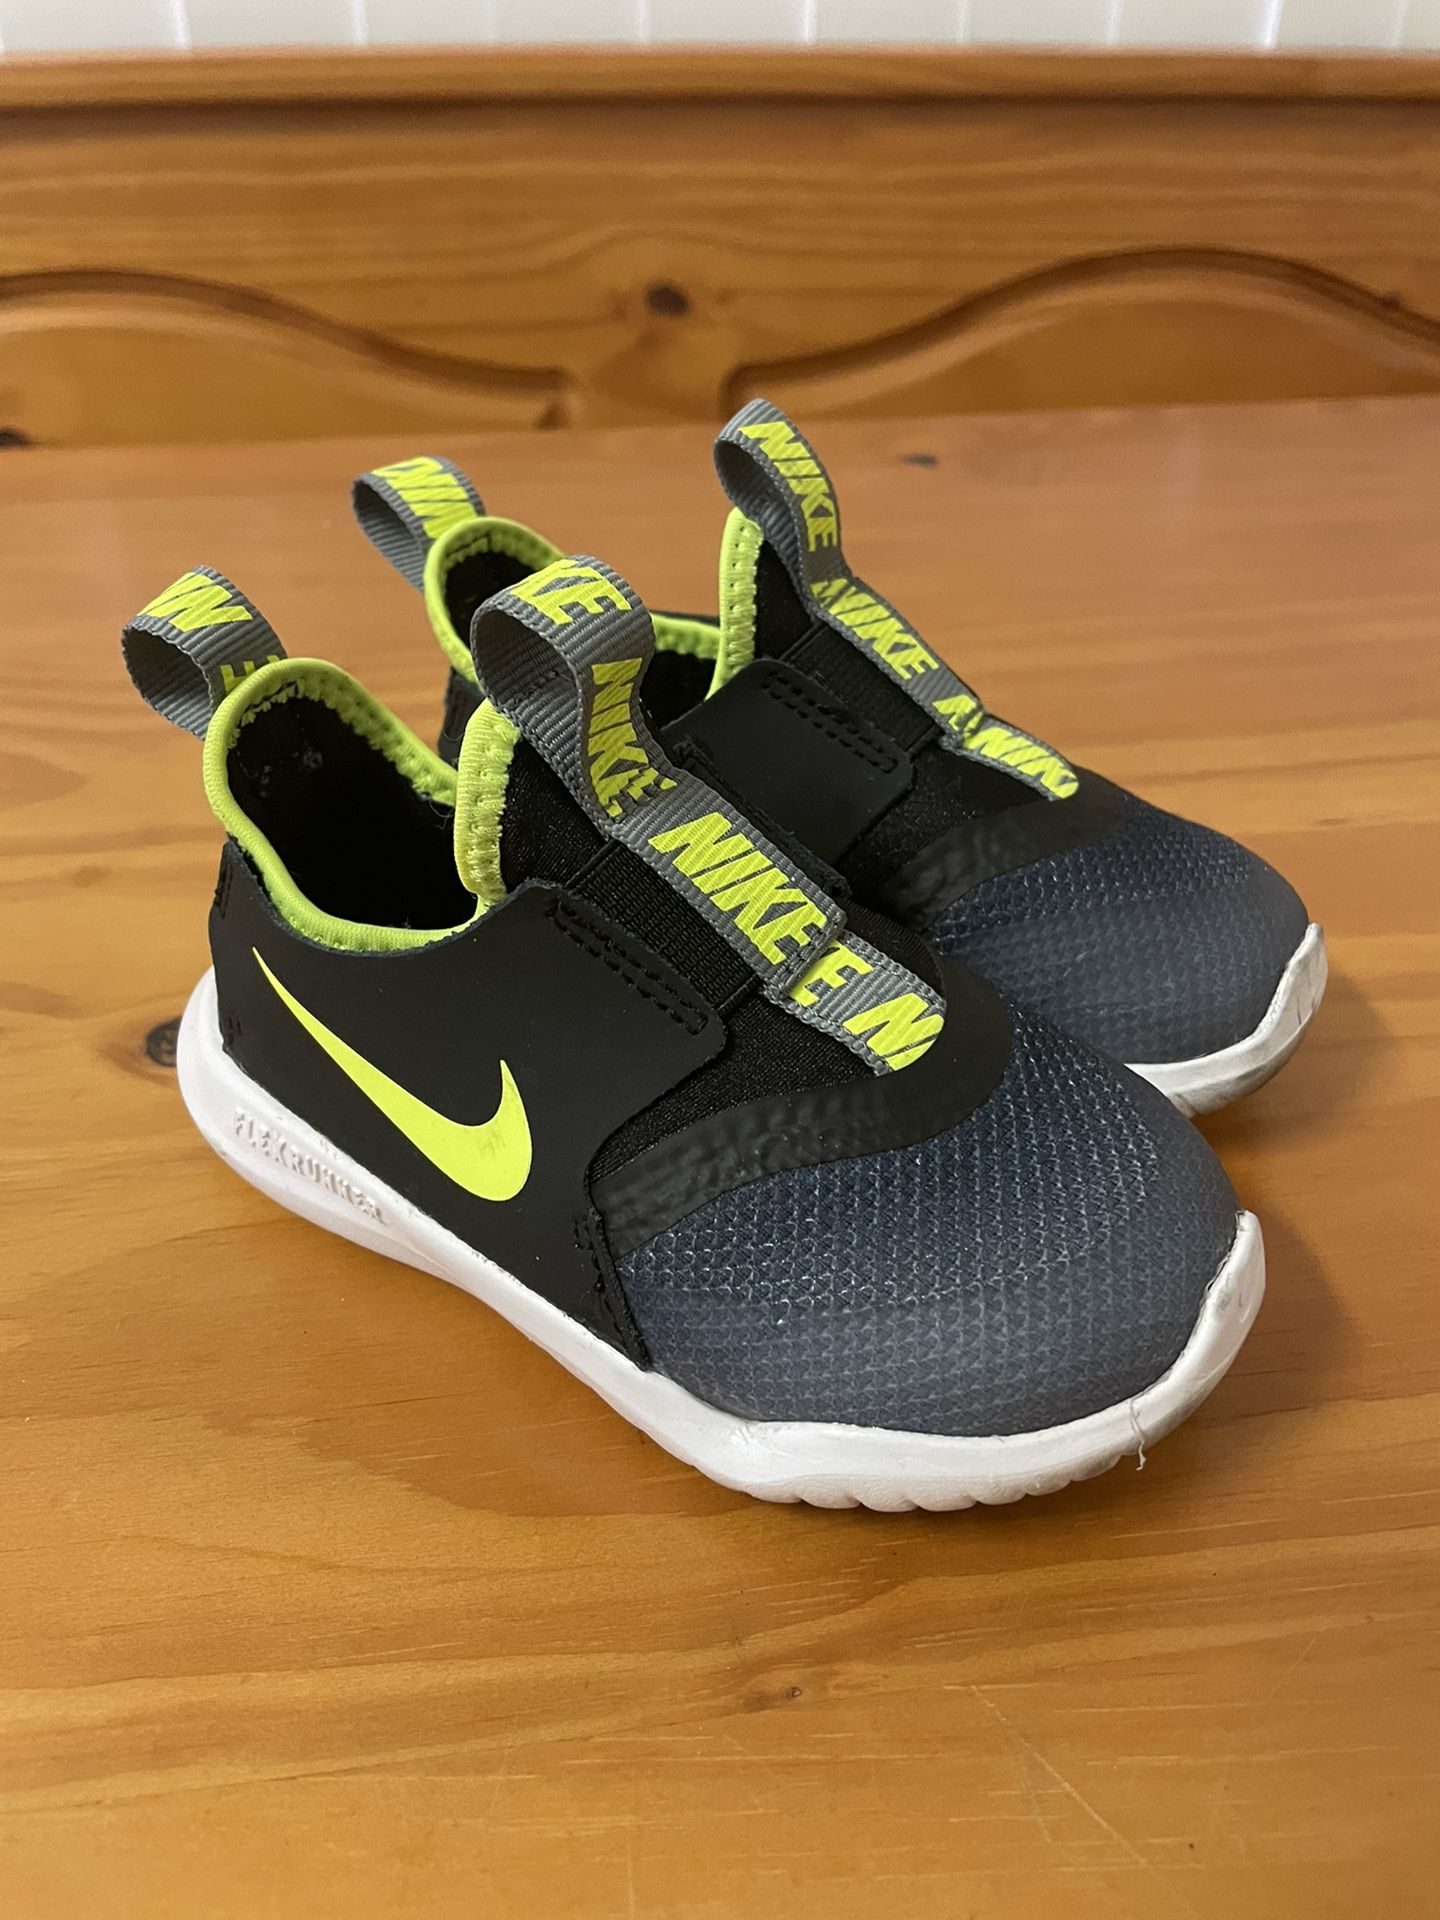 Nike Flex runner Toddler Shoes Size 7